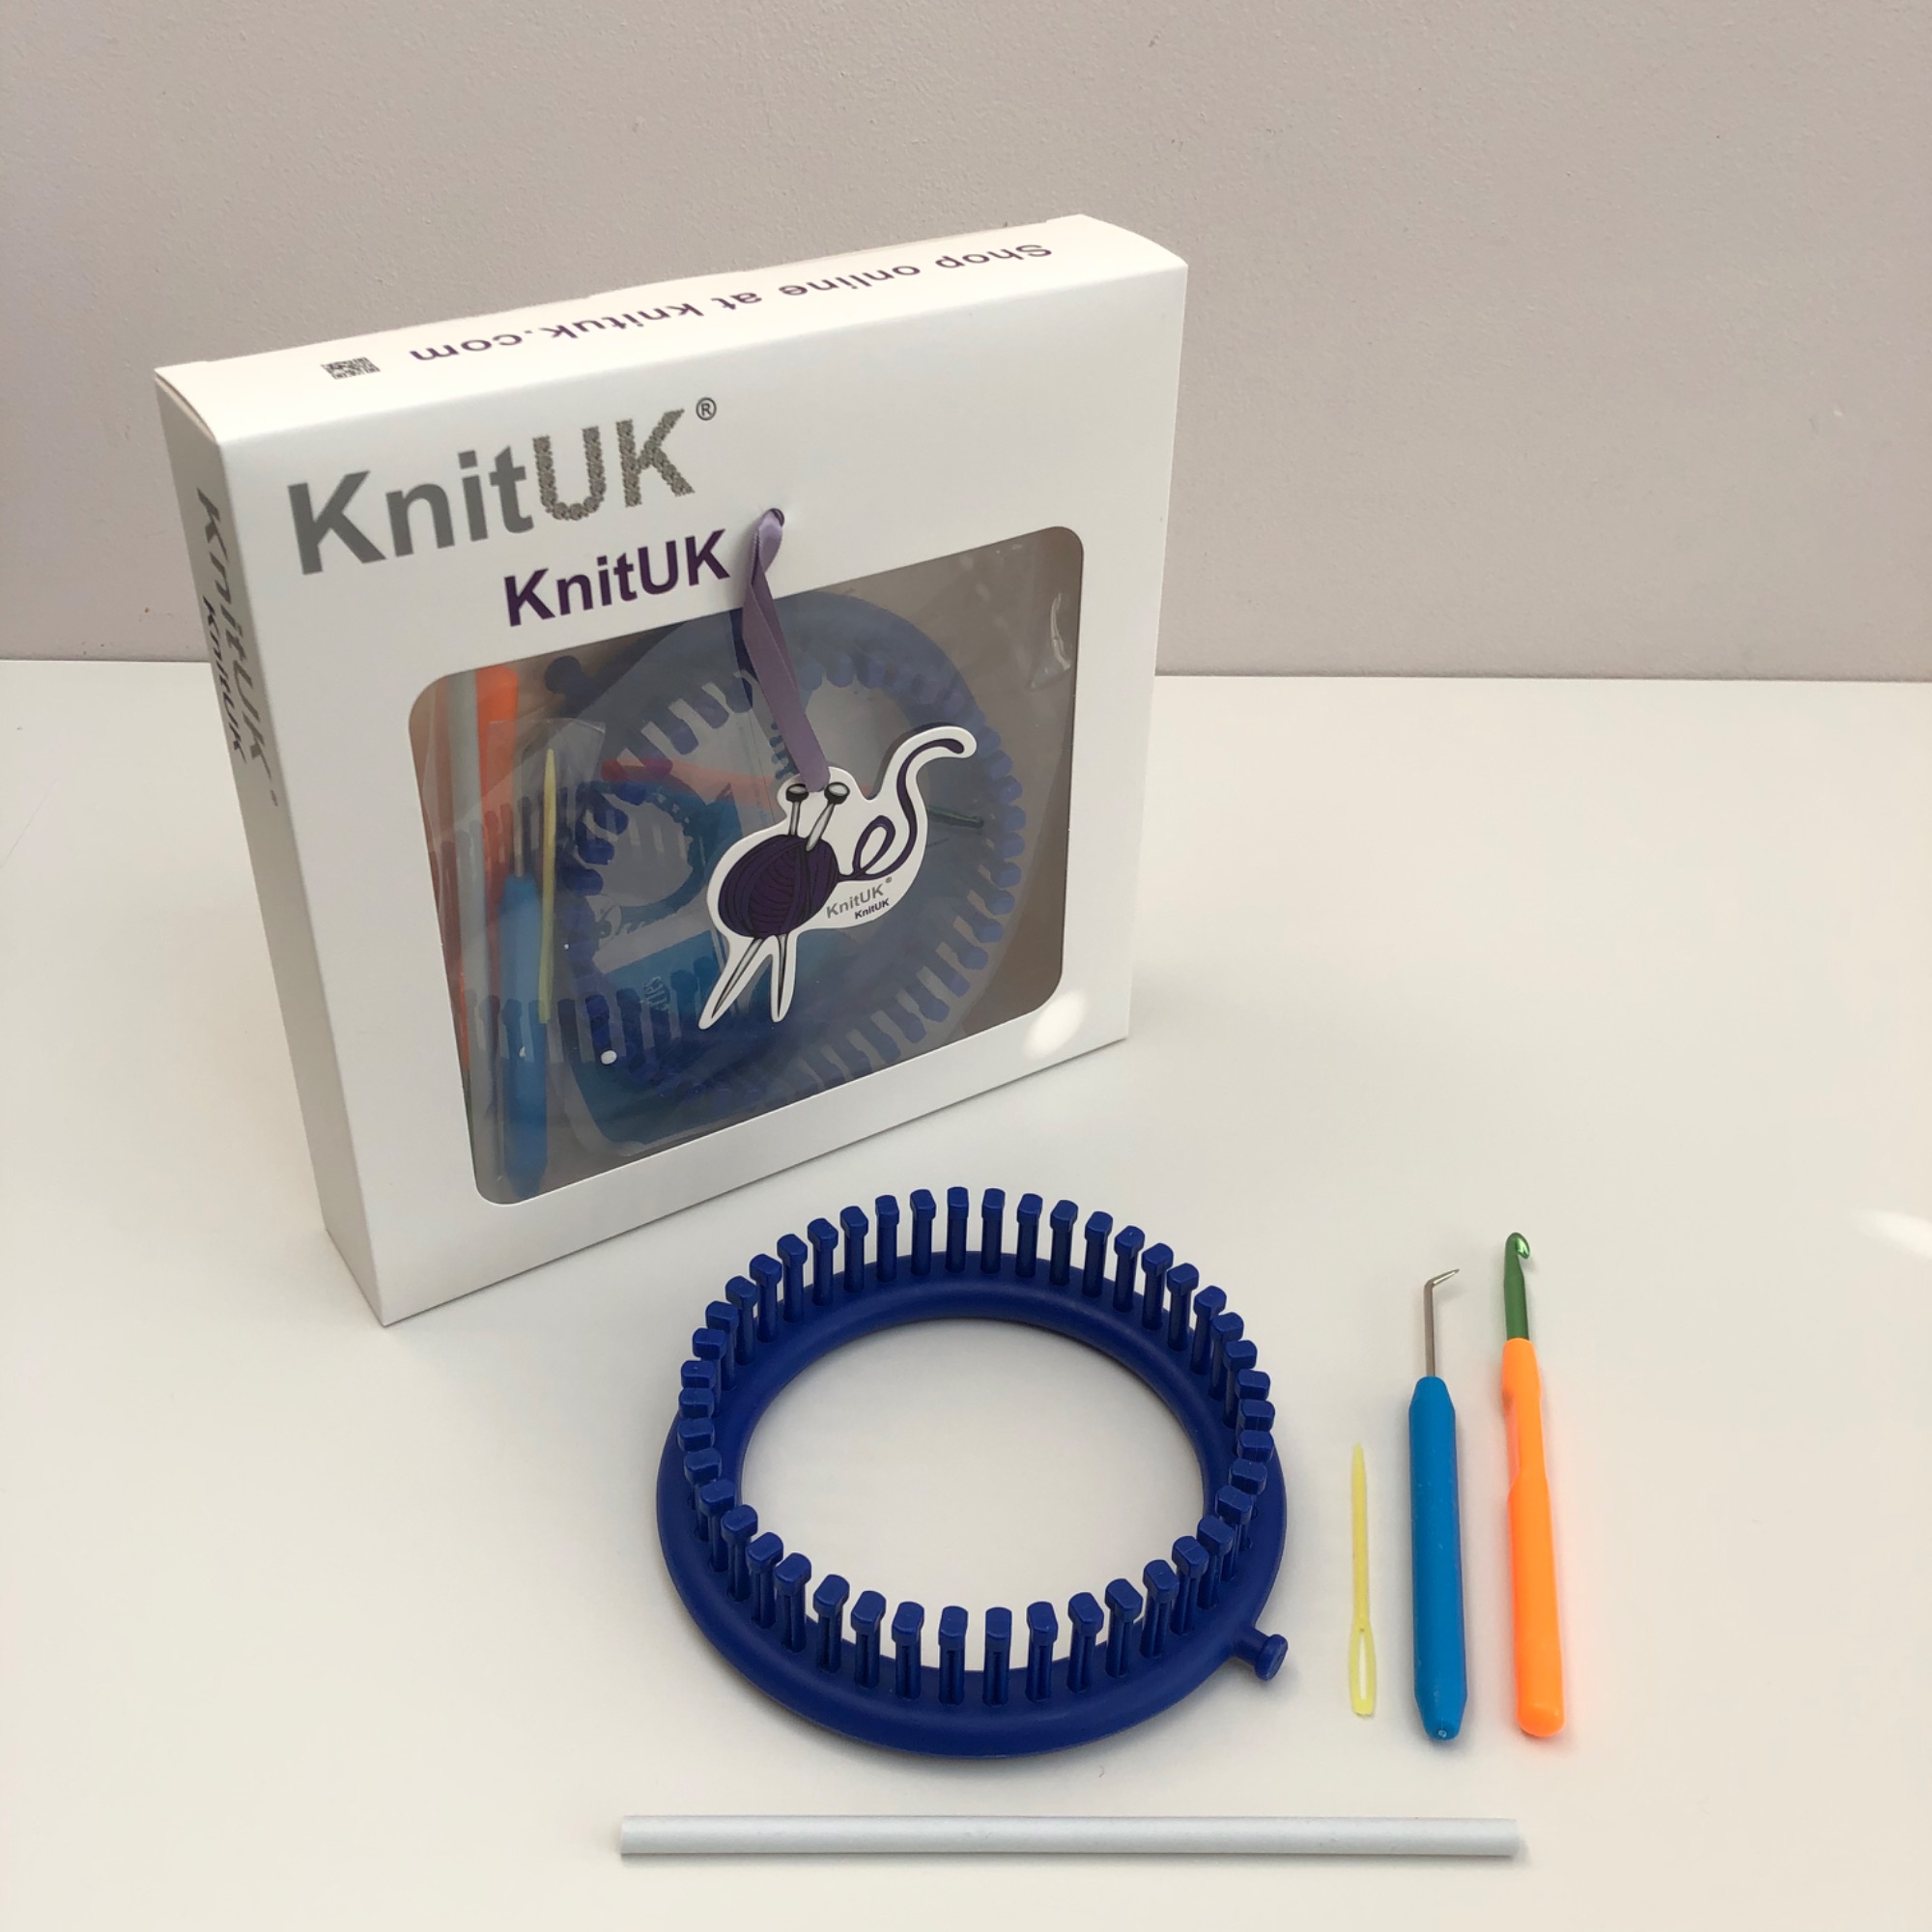 Knituk round blue knitting loom medium gauge 44 pegs fitted box